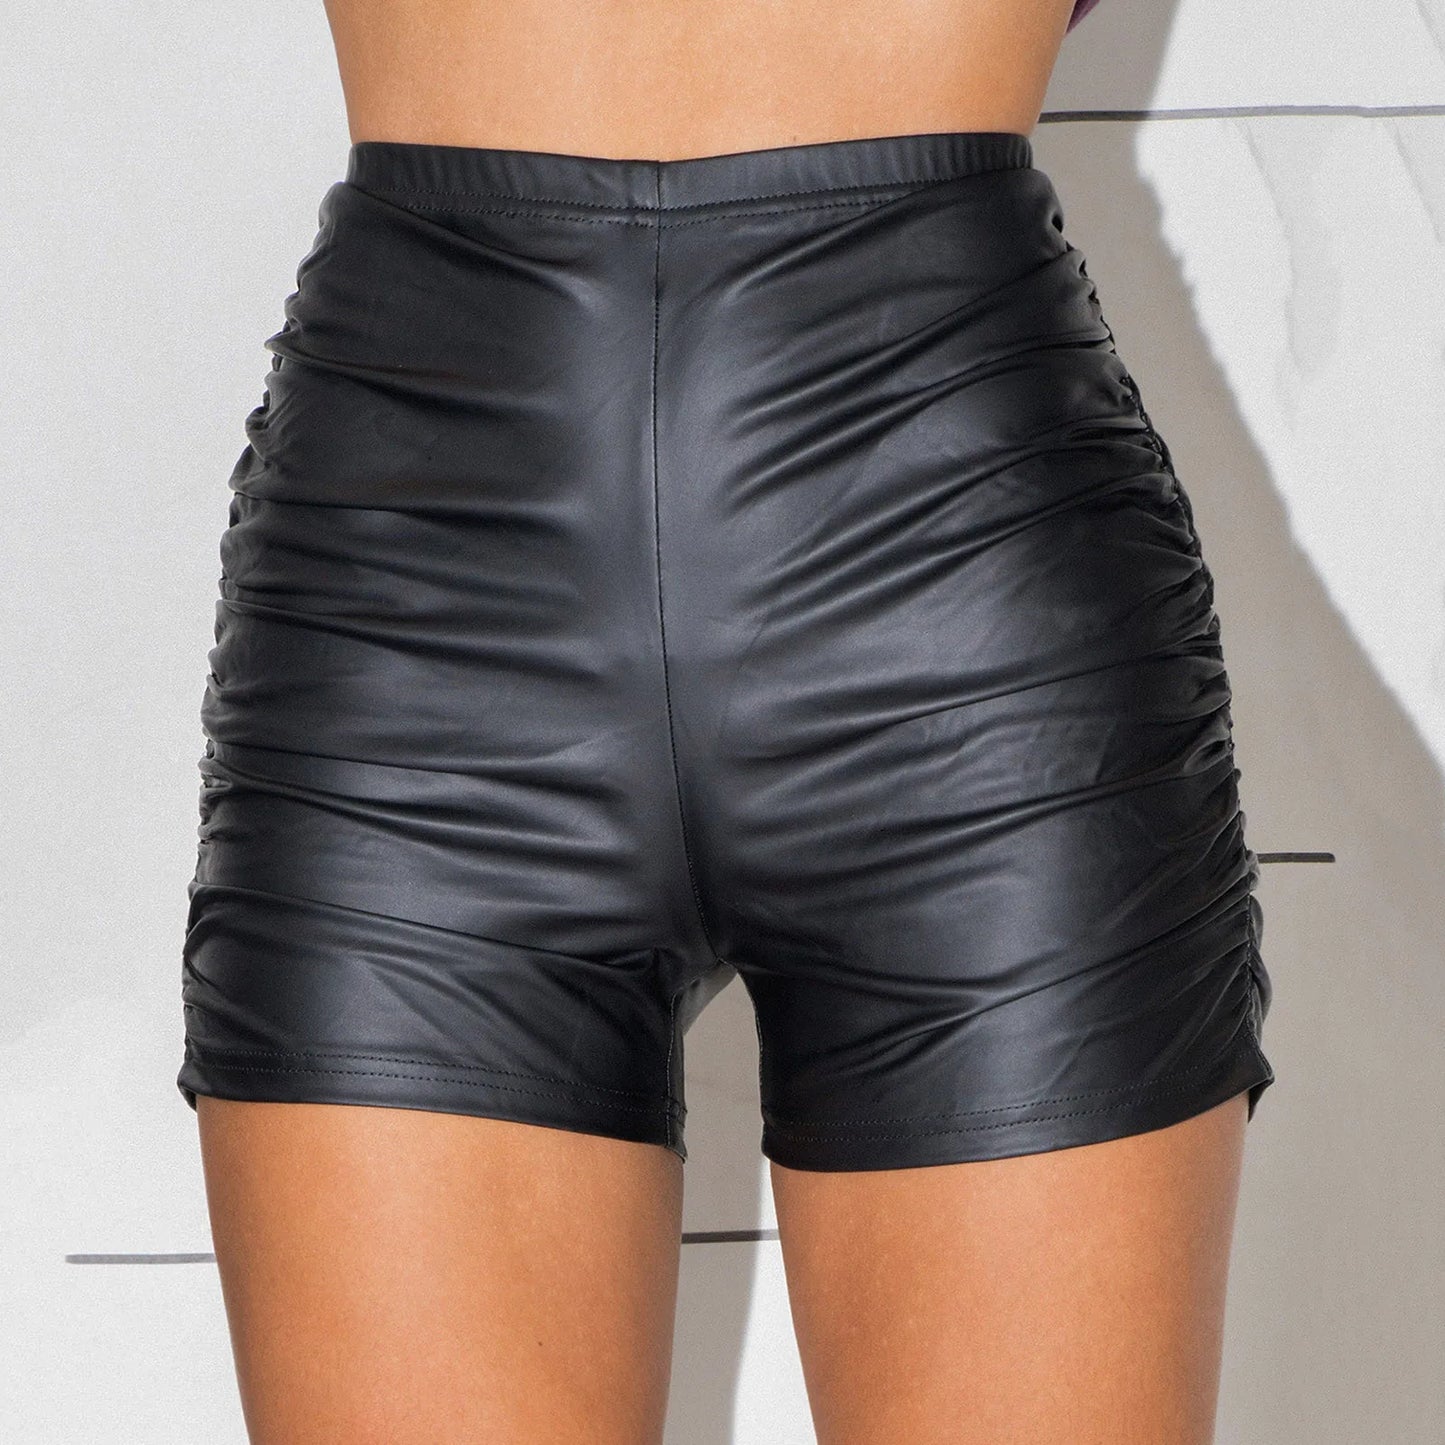 Summer Sexy Black Faux PU Leather Shorts Women Fashion Gothic High Waist Casual Shorts Y2k Hot Woman Short Pants